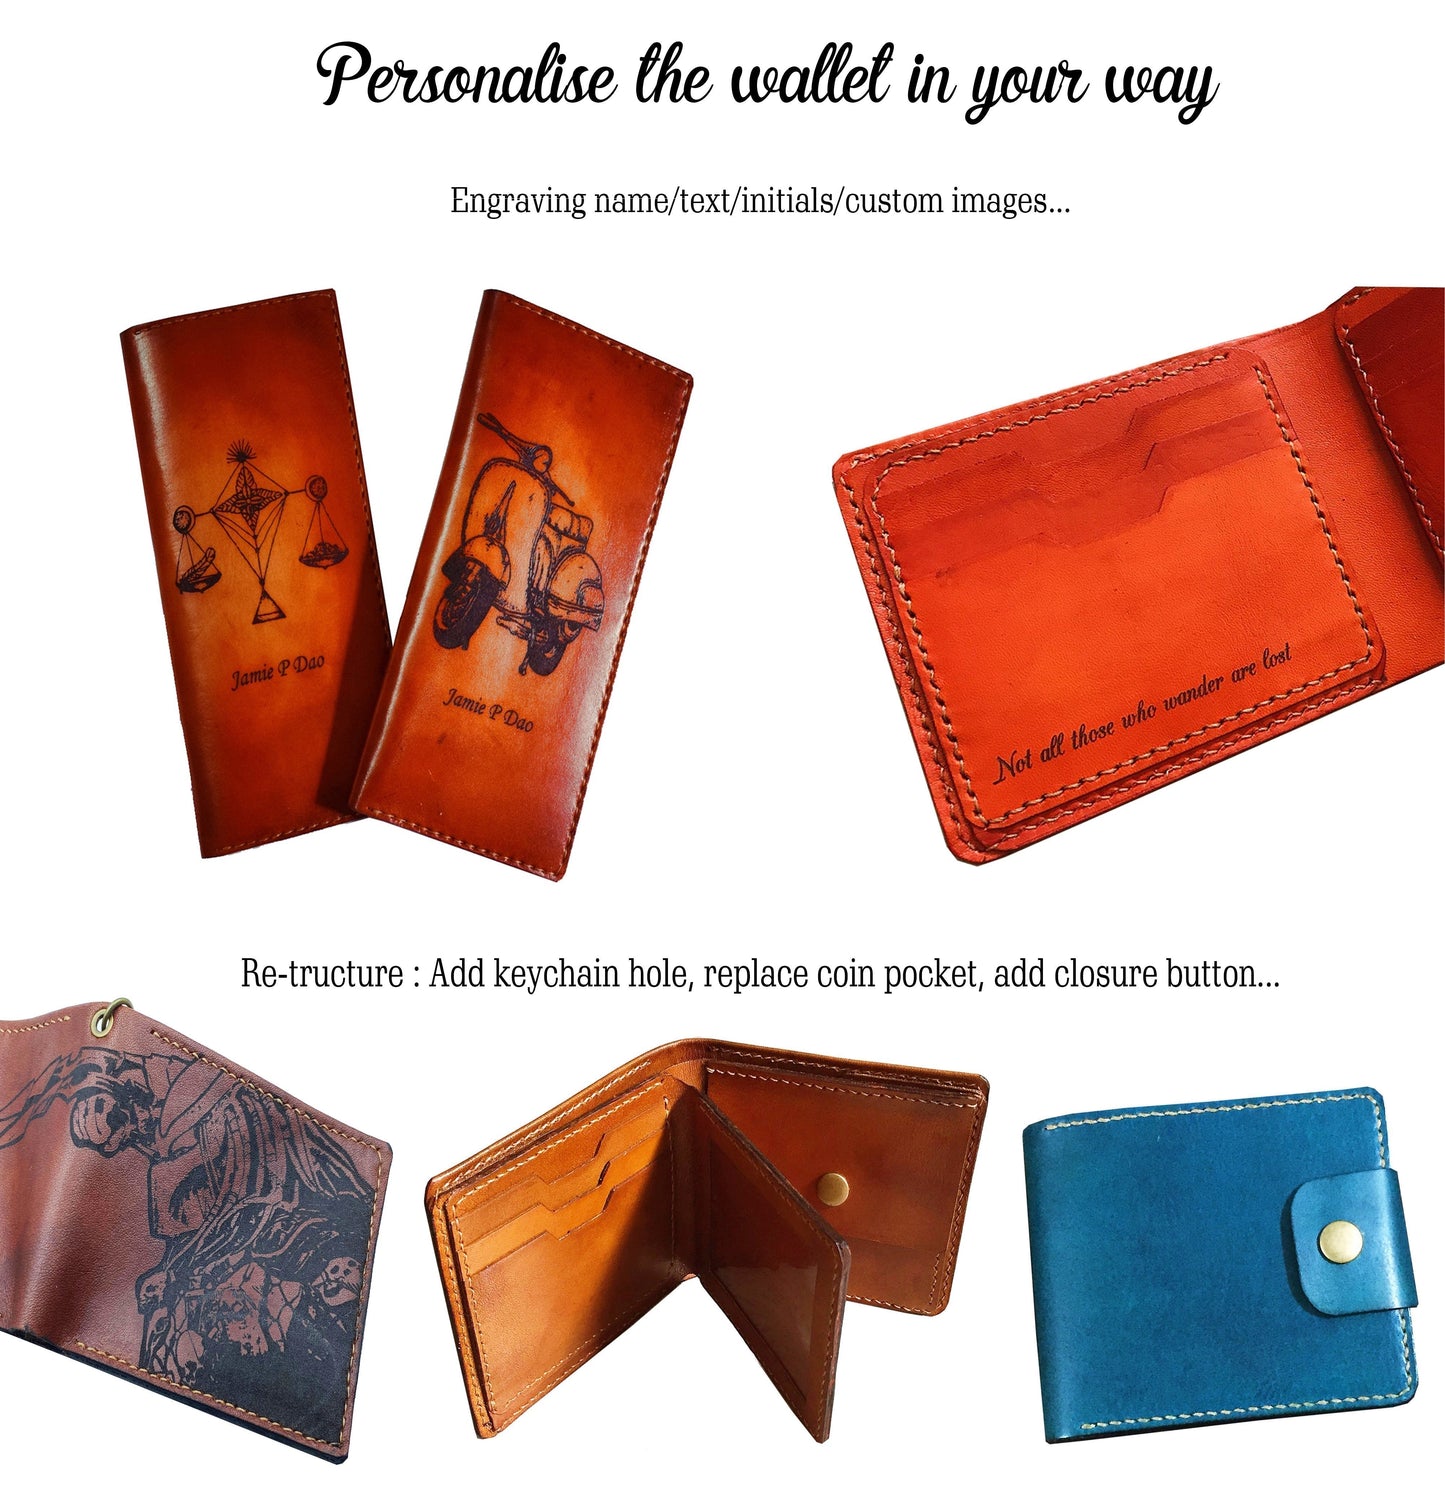 Pesonalized leather gift ideas, Alien Xenomorph art wallet, custom engrave gift ideas for men